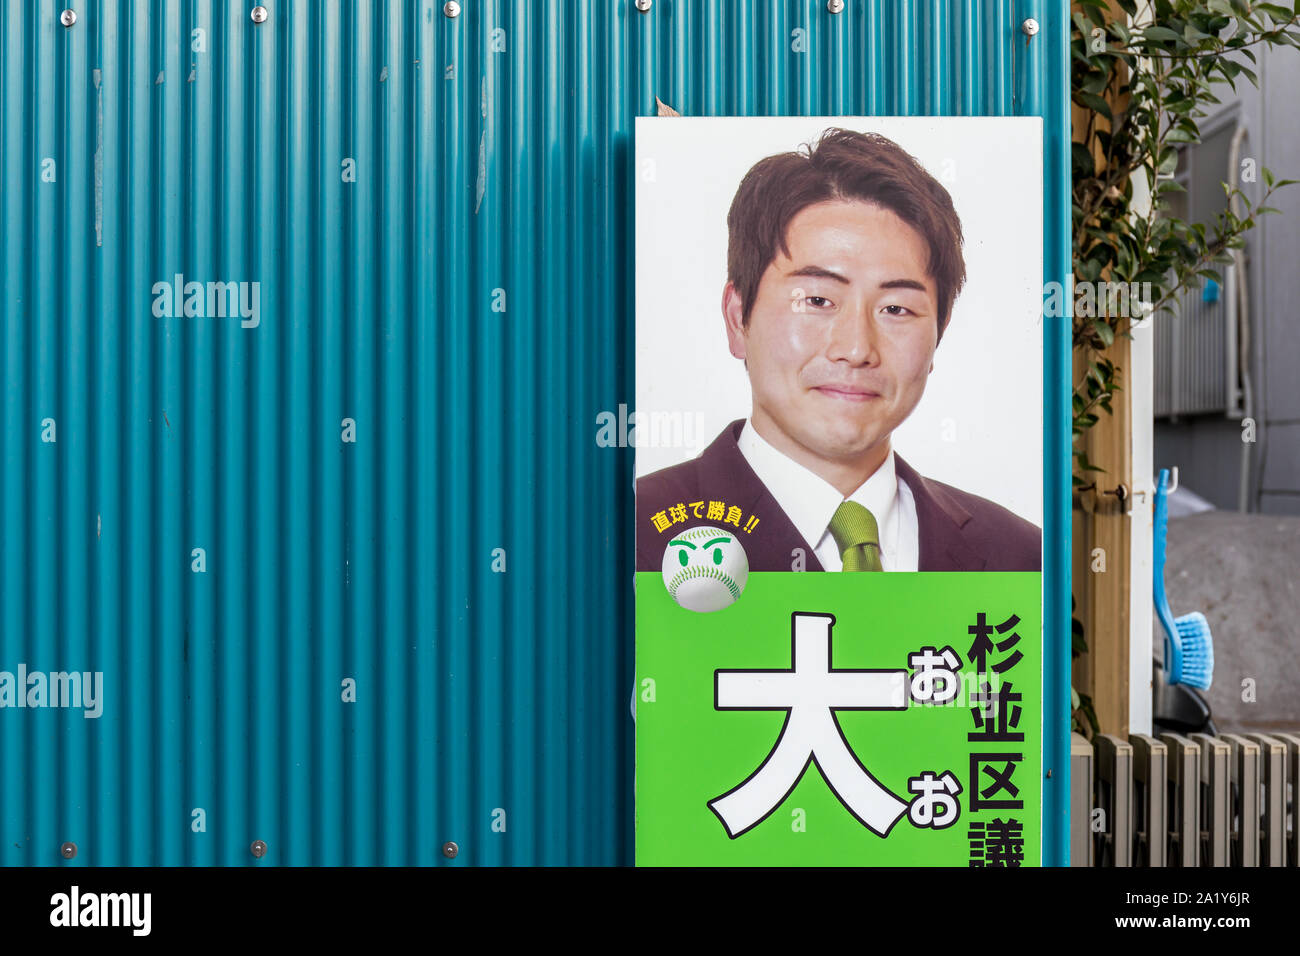 Poster for LDP politician Shin Owada; Suginami, Tokyo Stock Photo